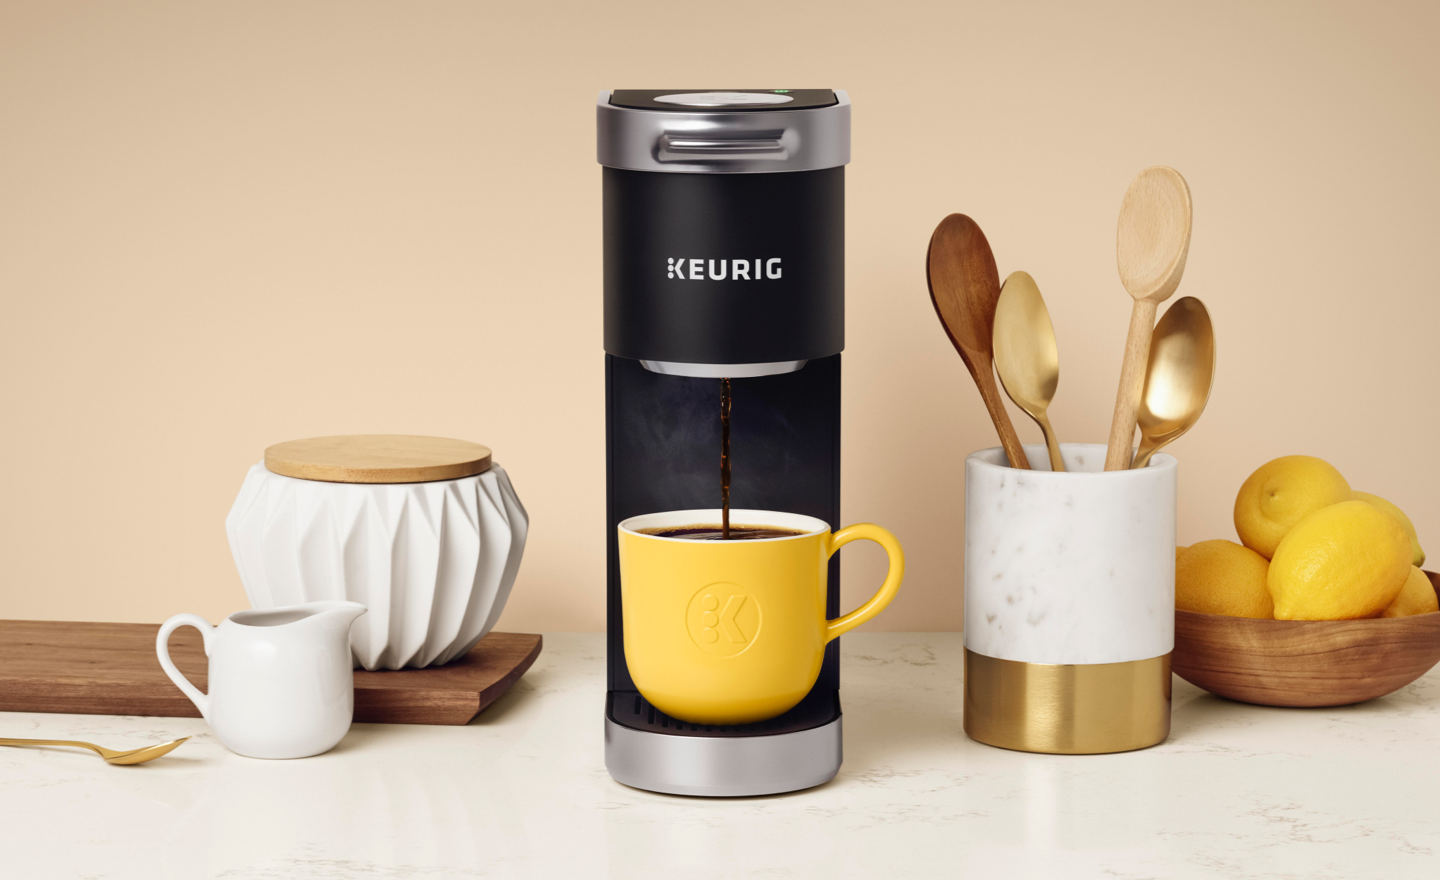 Keurig coffee maker brewing into a mug